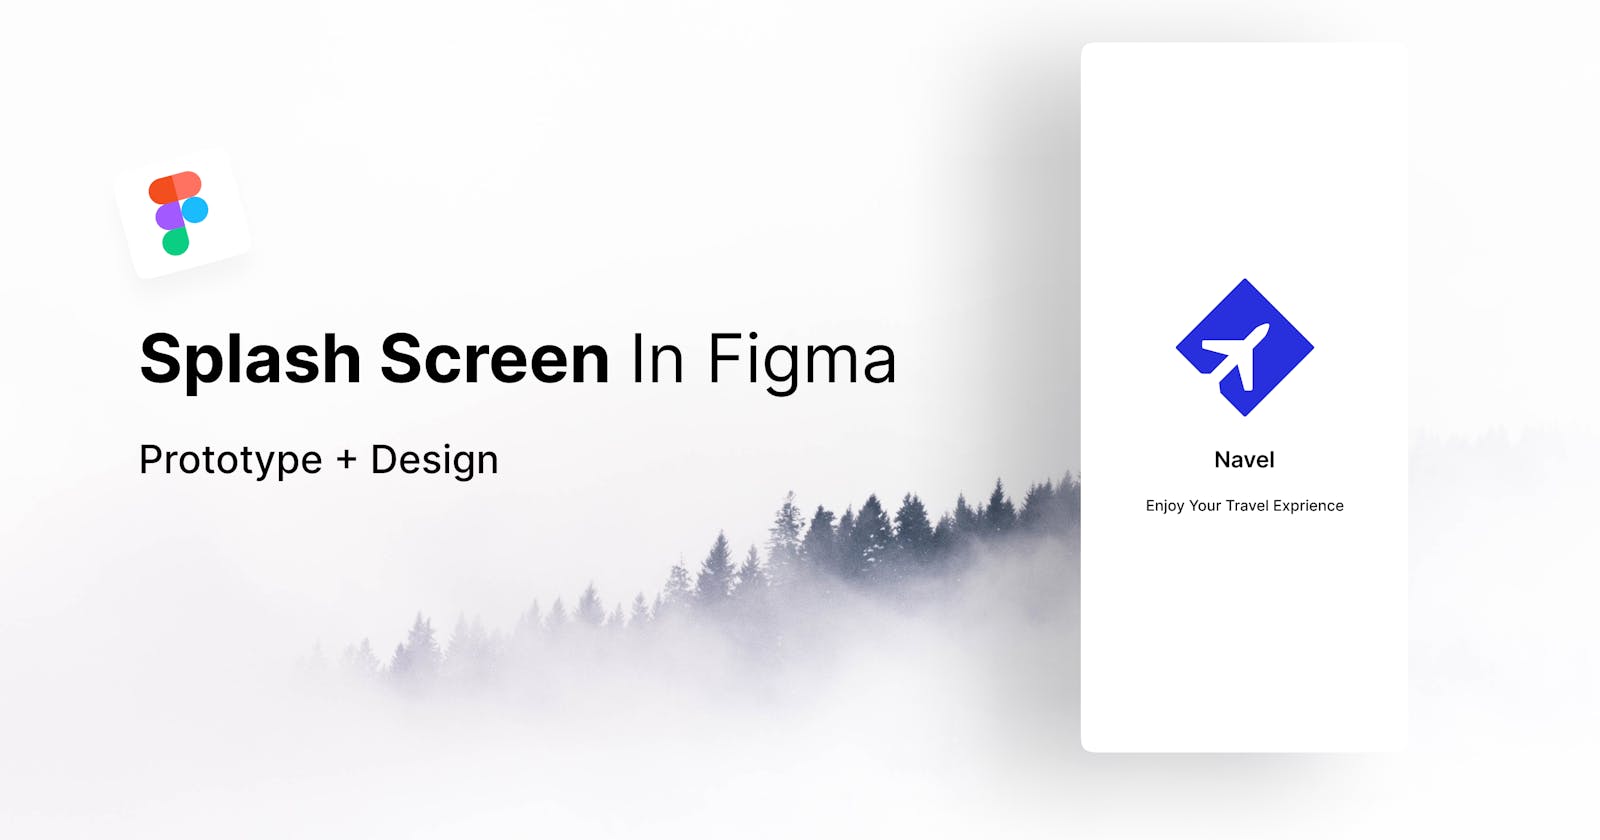 How to create a simple splash screen in Figma